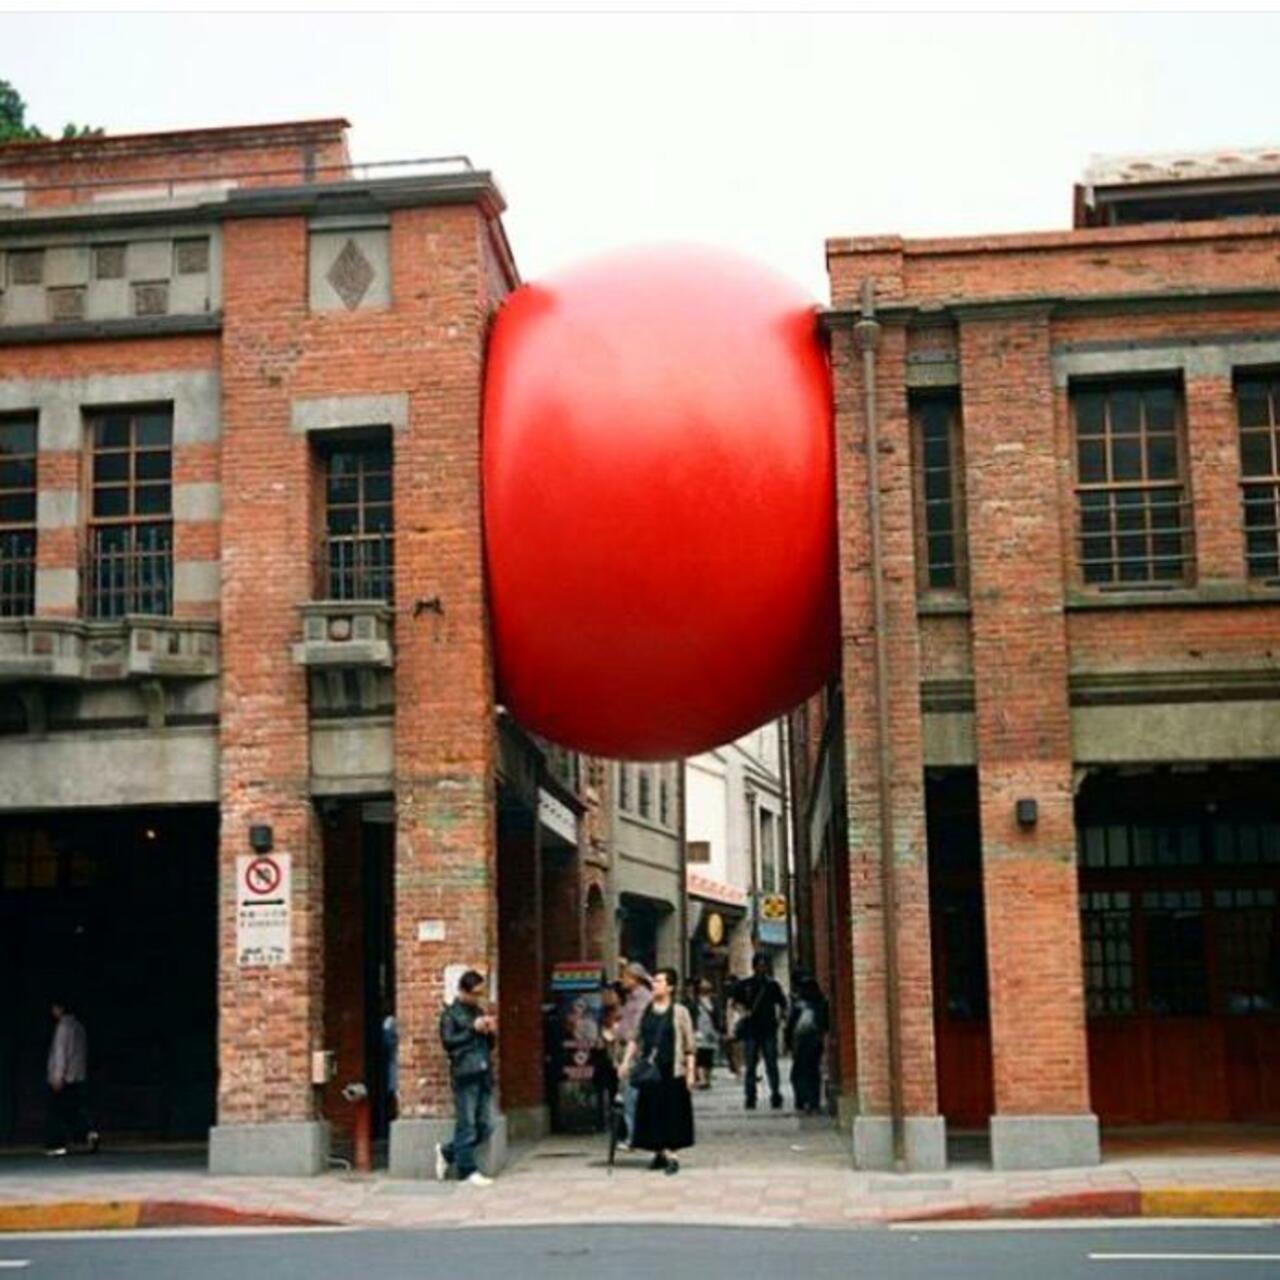 RT @streetartnews: “Red Ball Project” Street Installation by Kurt Perschke in Amsterdam, Netherlands #streetart #streetartnews http://t.co/F5ynDtHJJb